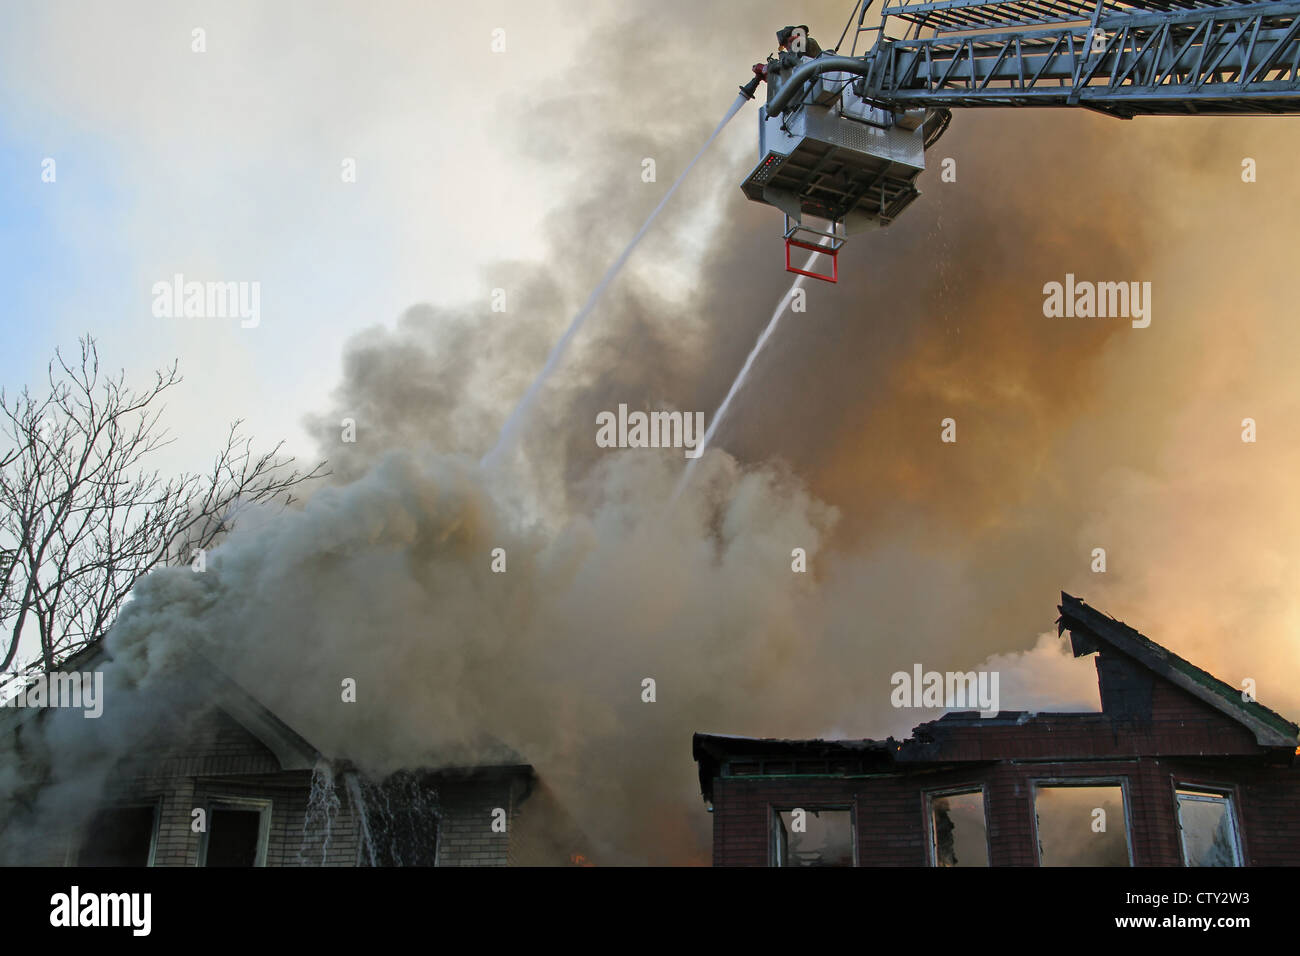 Detroit Fire Department Aerial Platform extinguishing two apartment building fires, Detroit Michigan USA Stock Photo